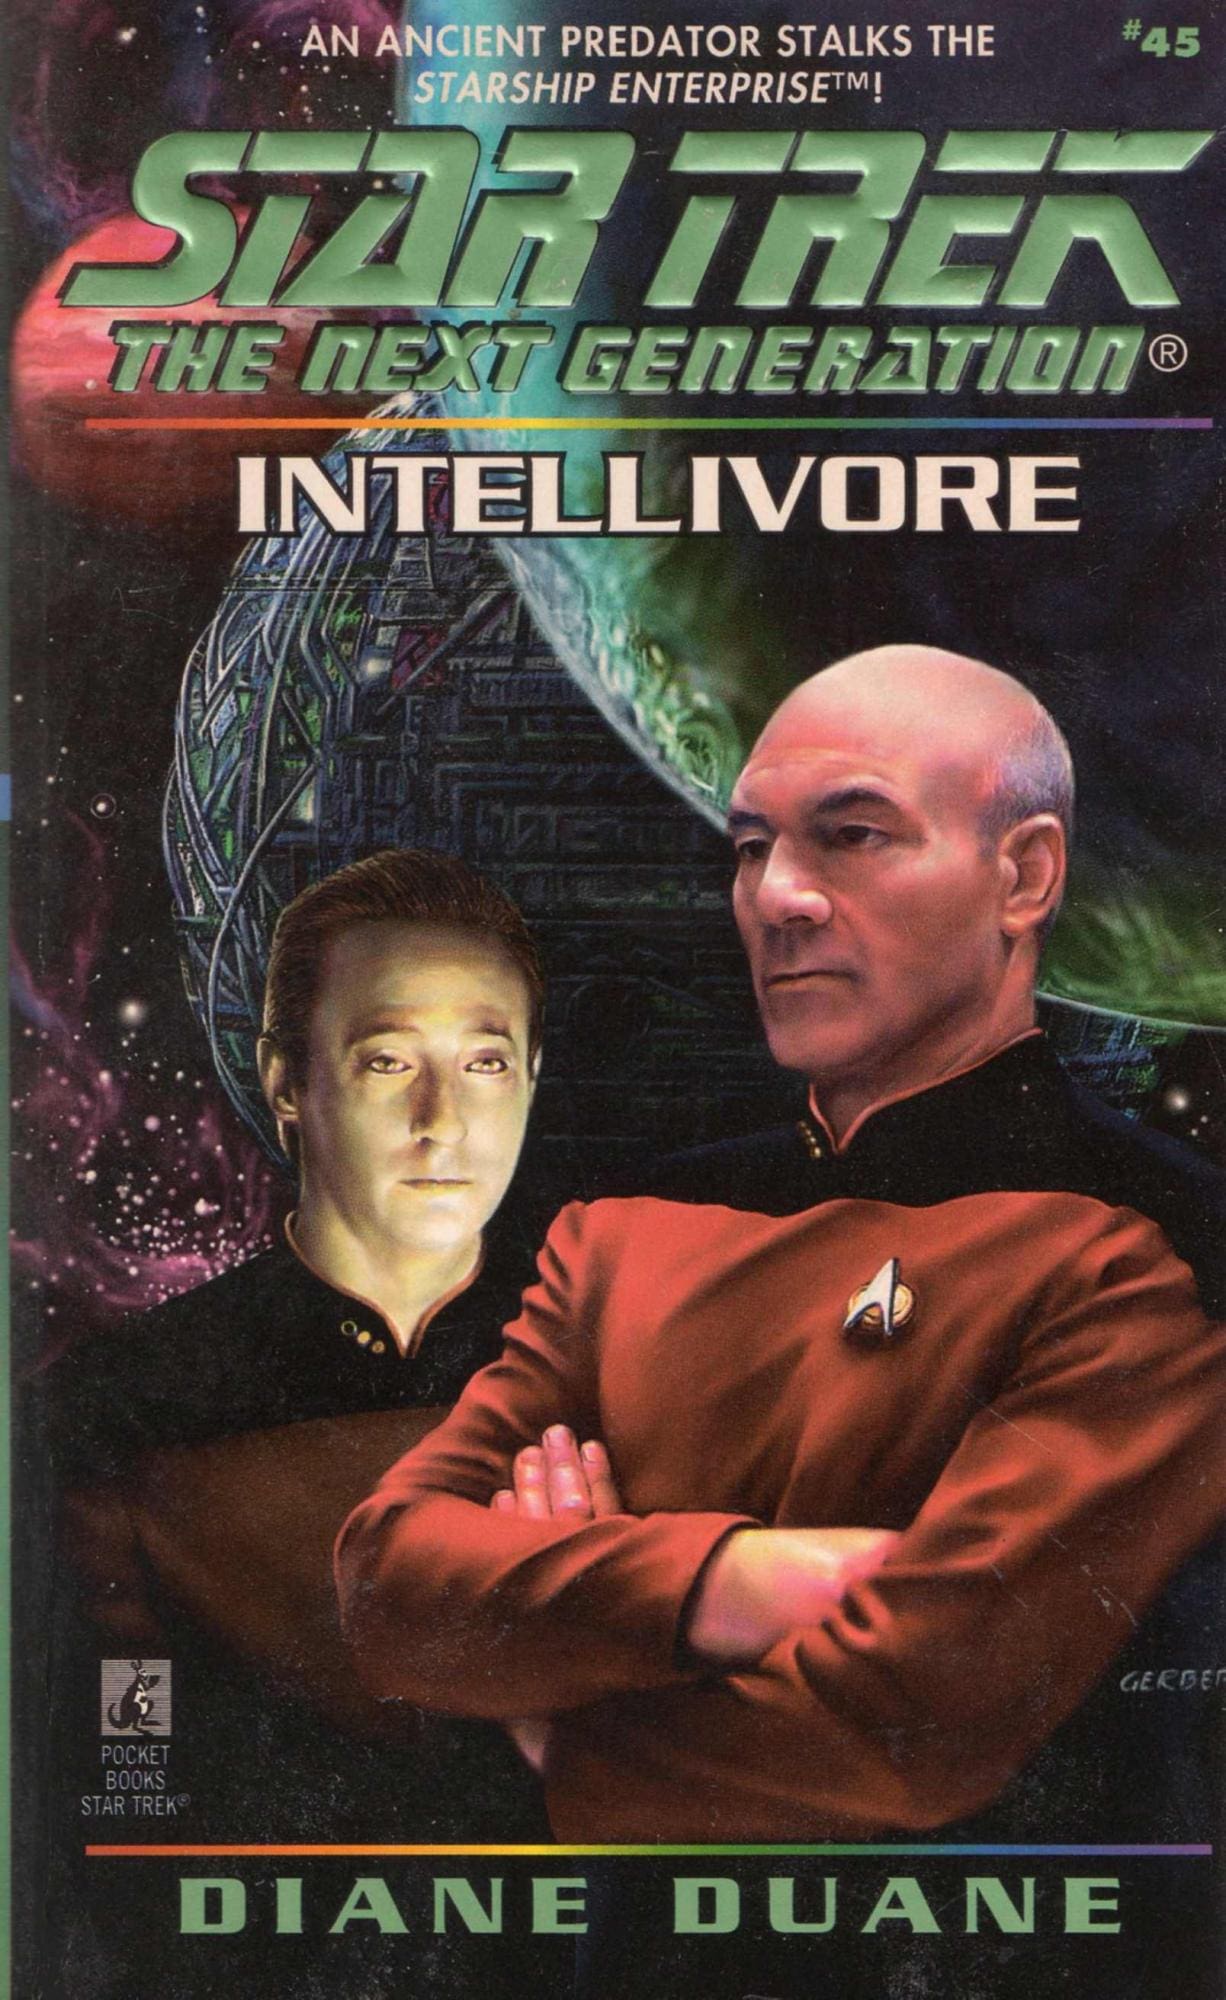 INTELLIVORE (Star Trek)